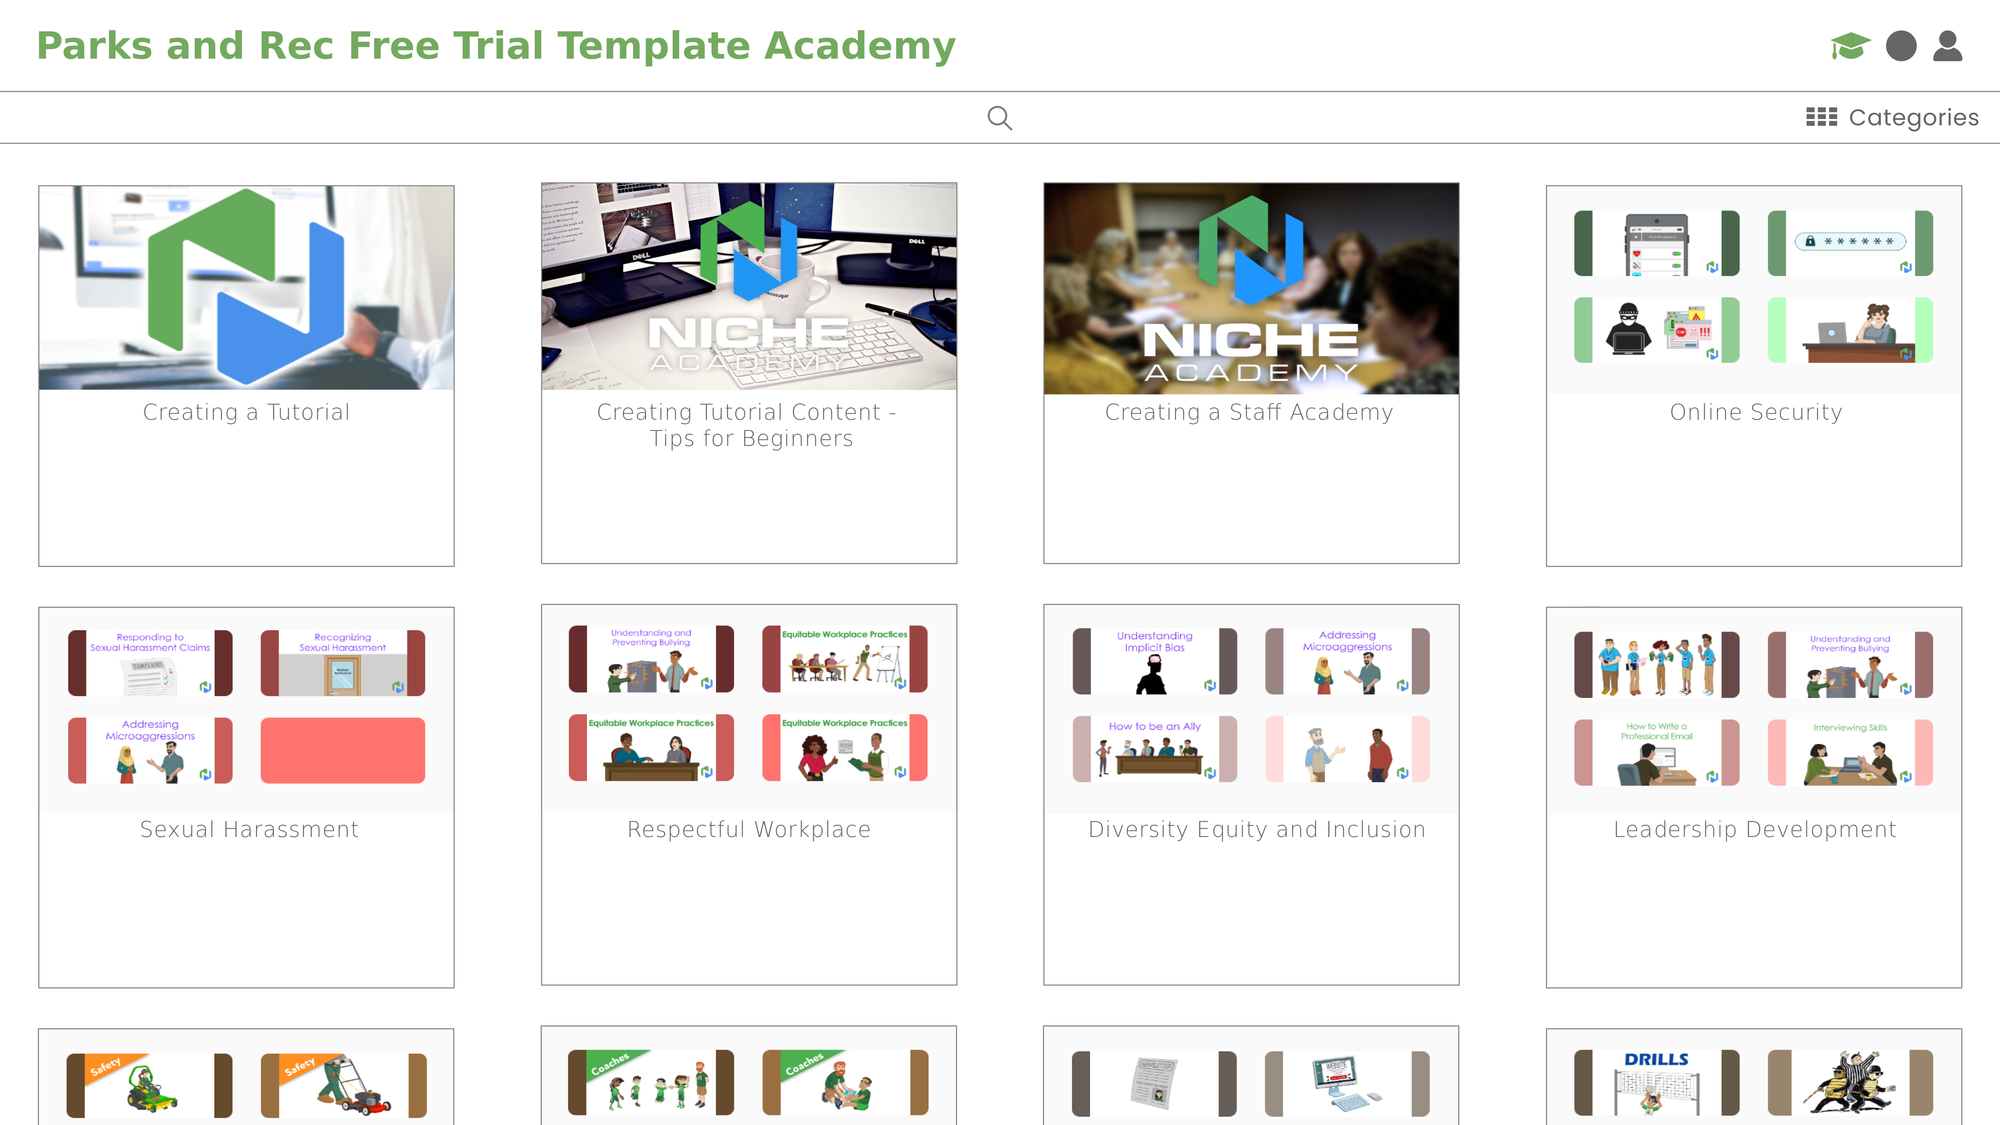 niche-academy-free-trial